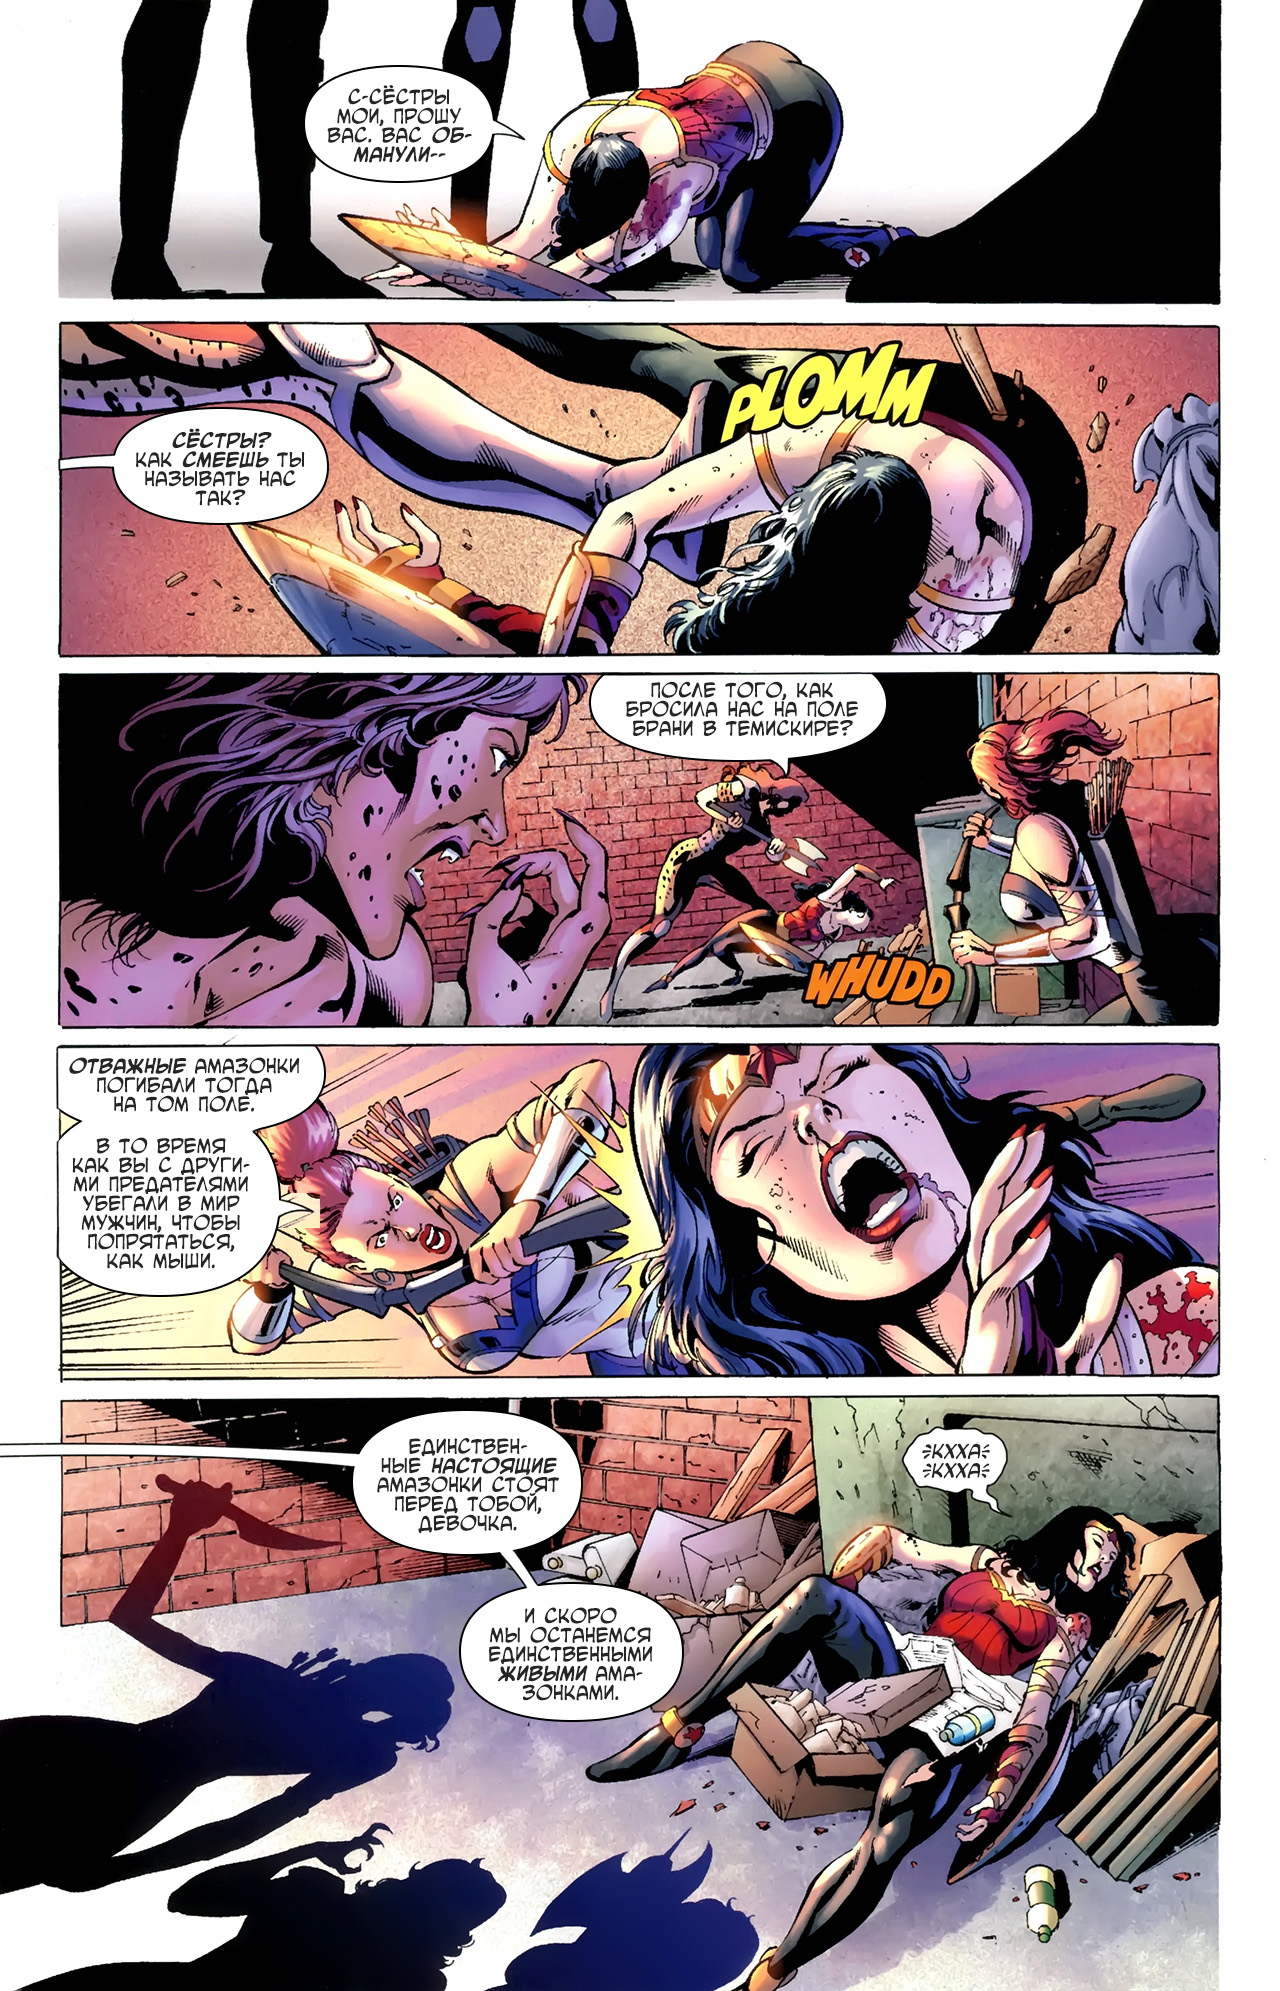 Wonder-Woman-608-pg-17.jpg